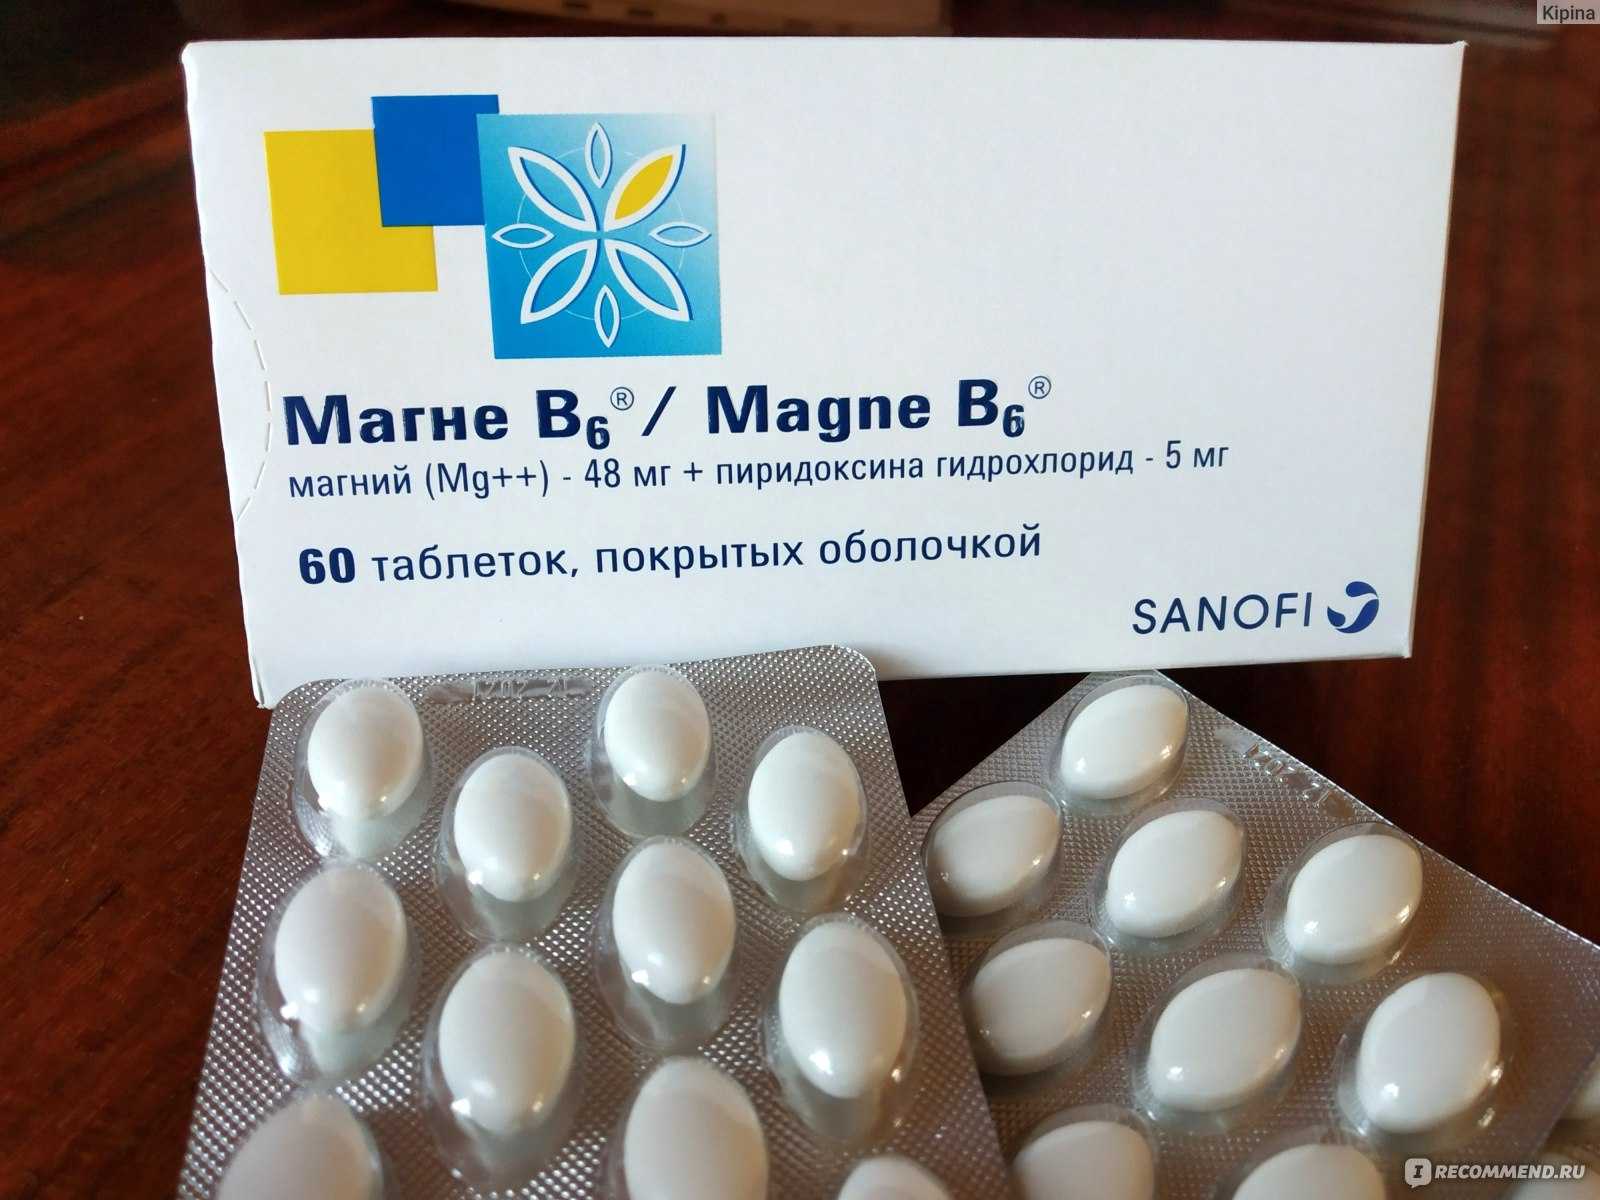 Витамин в есть в таблетках. Магне б6 400 мг. Магне б6 усиленный. Магне б6 500мг. Магне в6 табл.